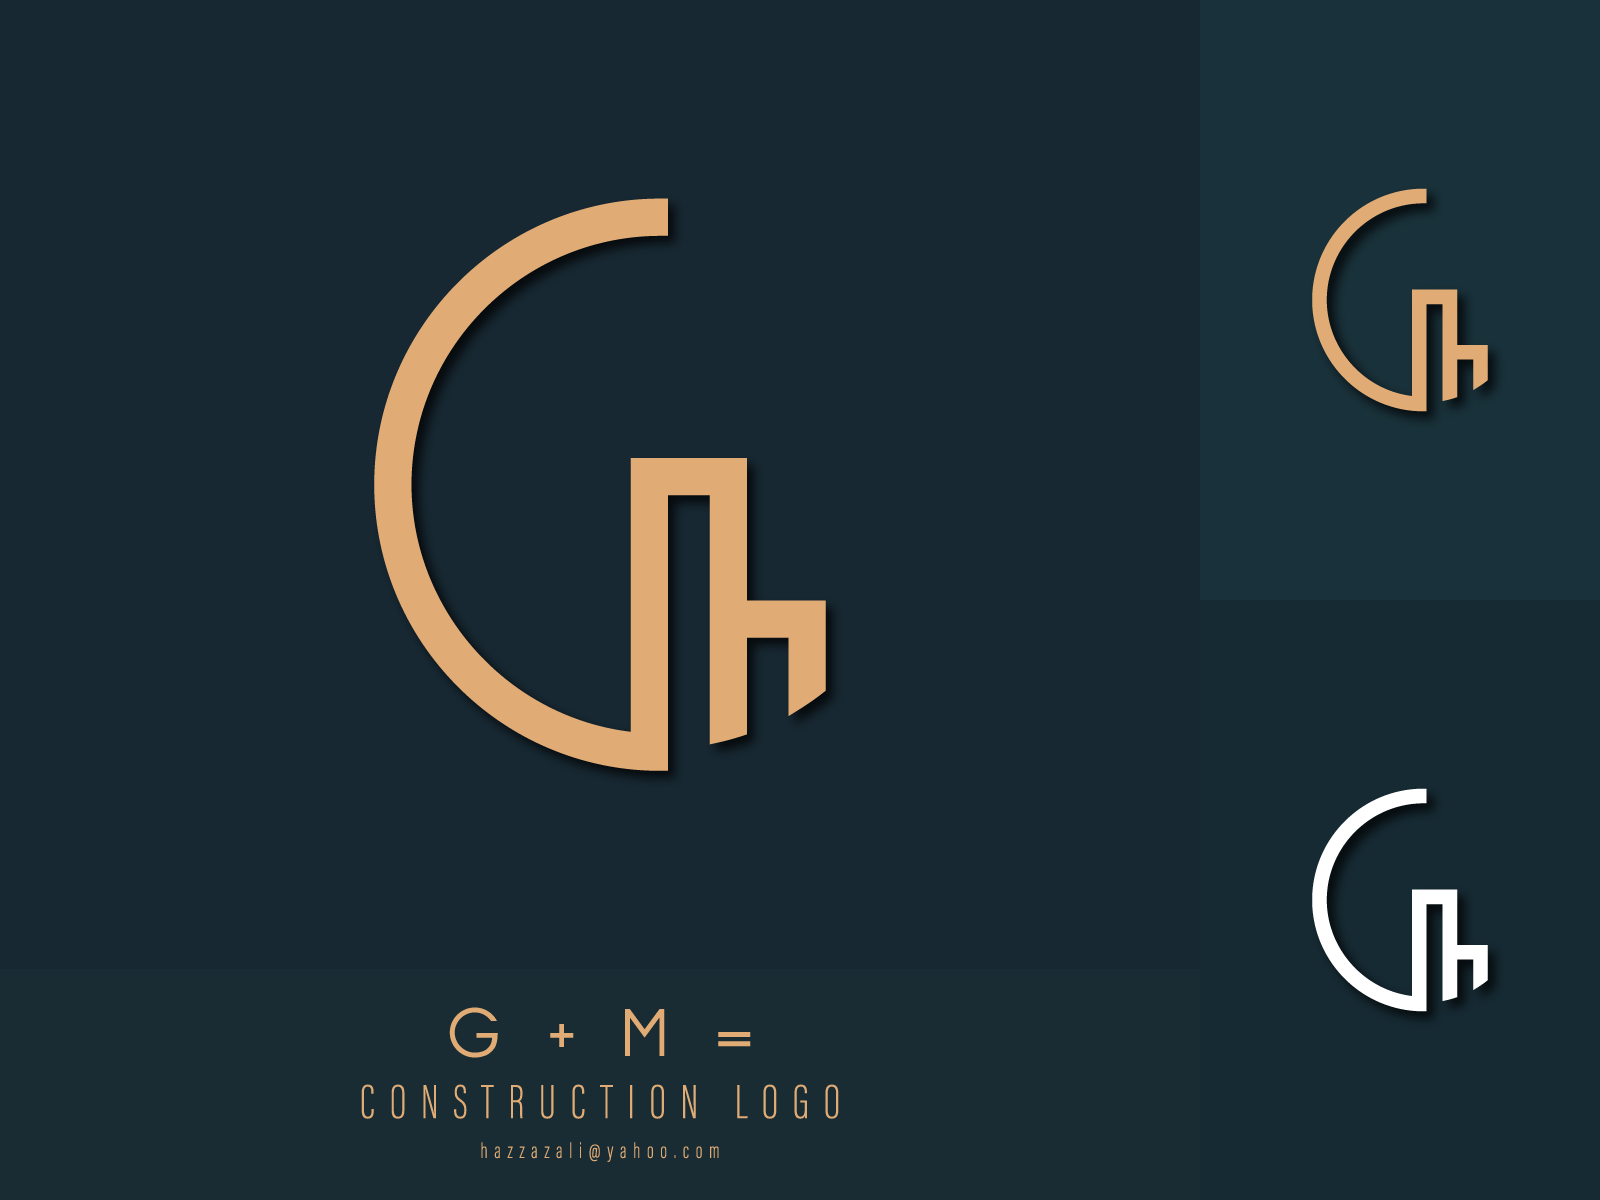 G M logo by Md Hazzaz on Dribbble